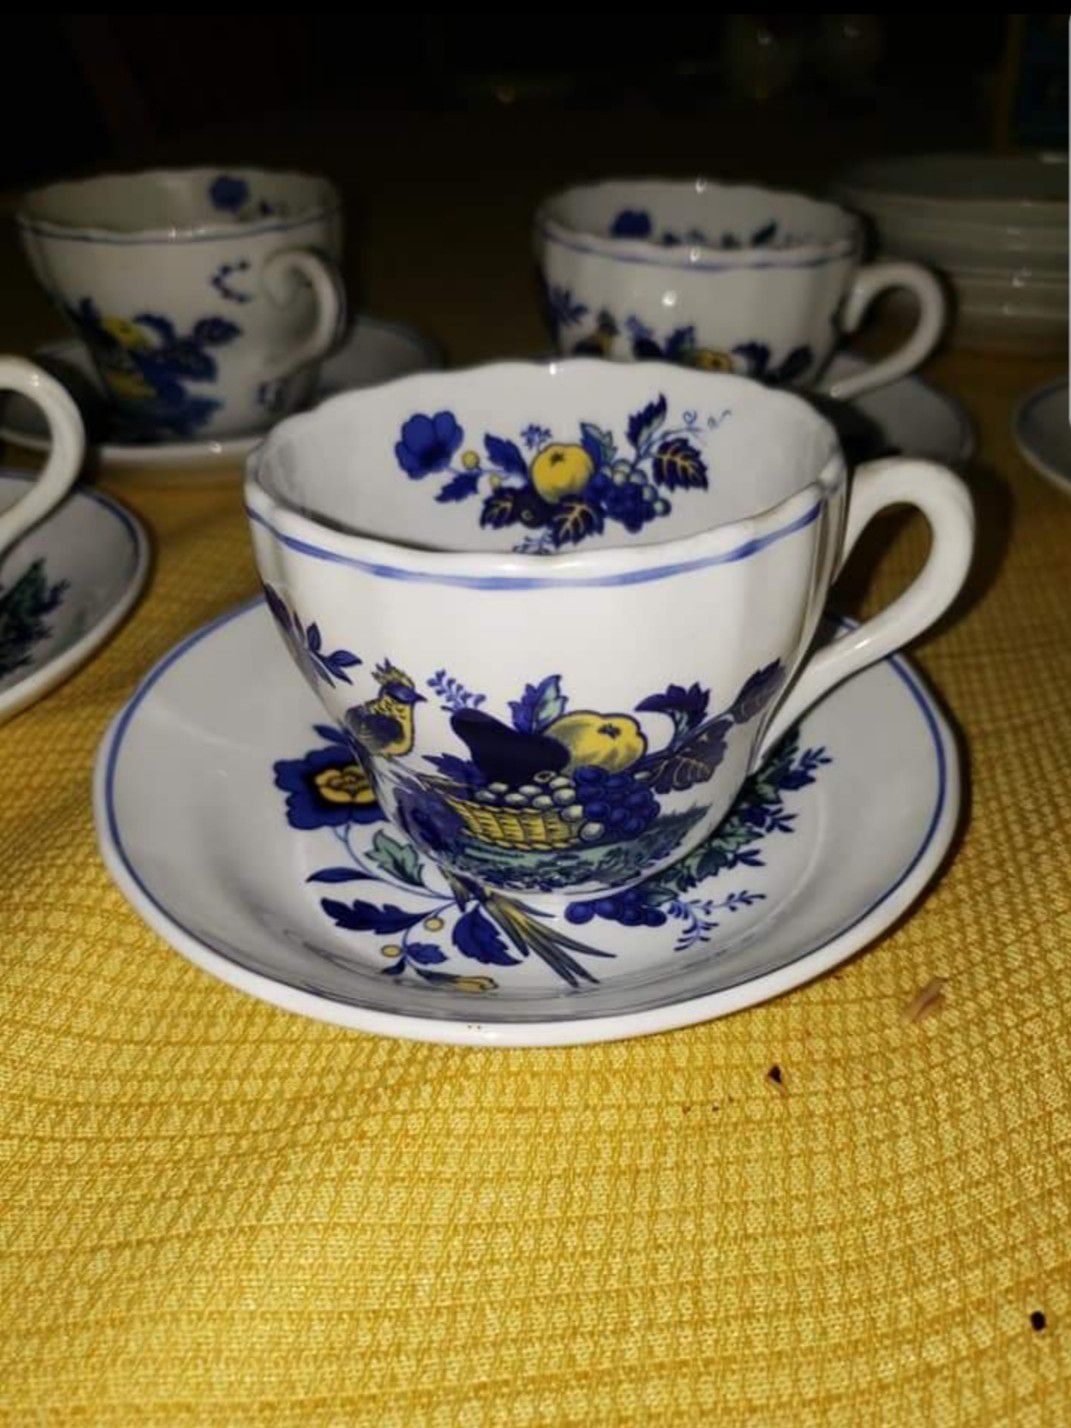 Spode blue bird cups and saucers